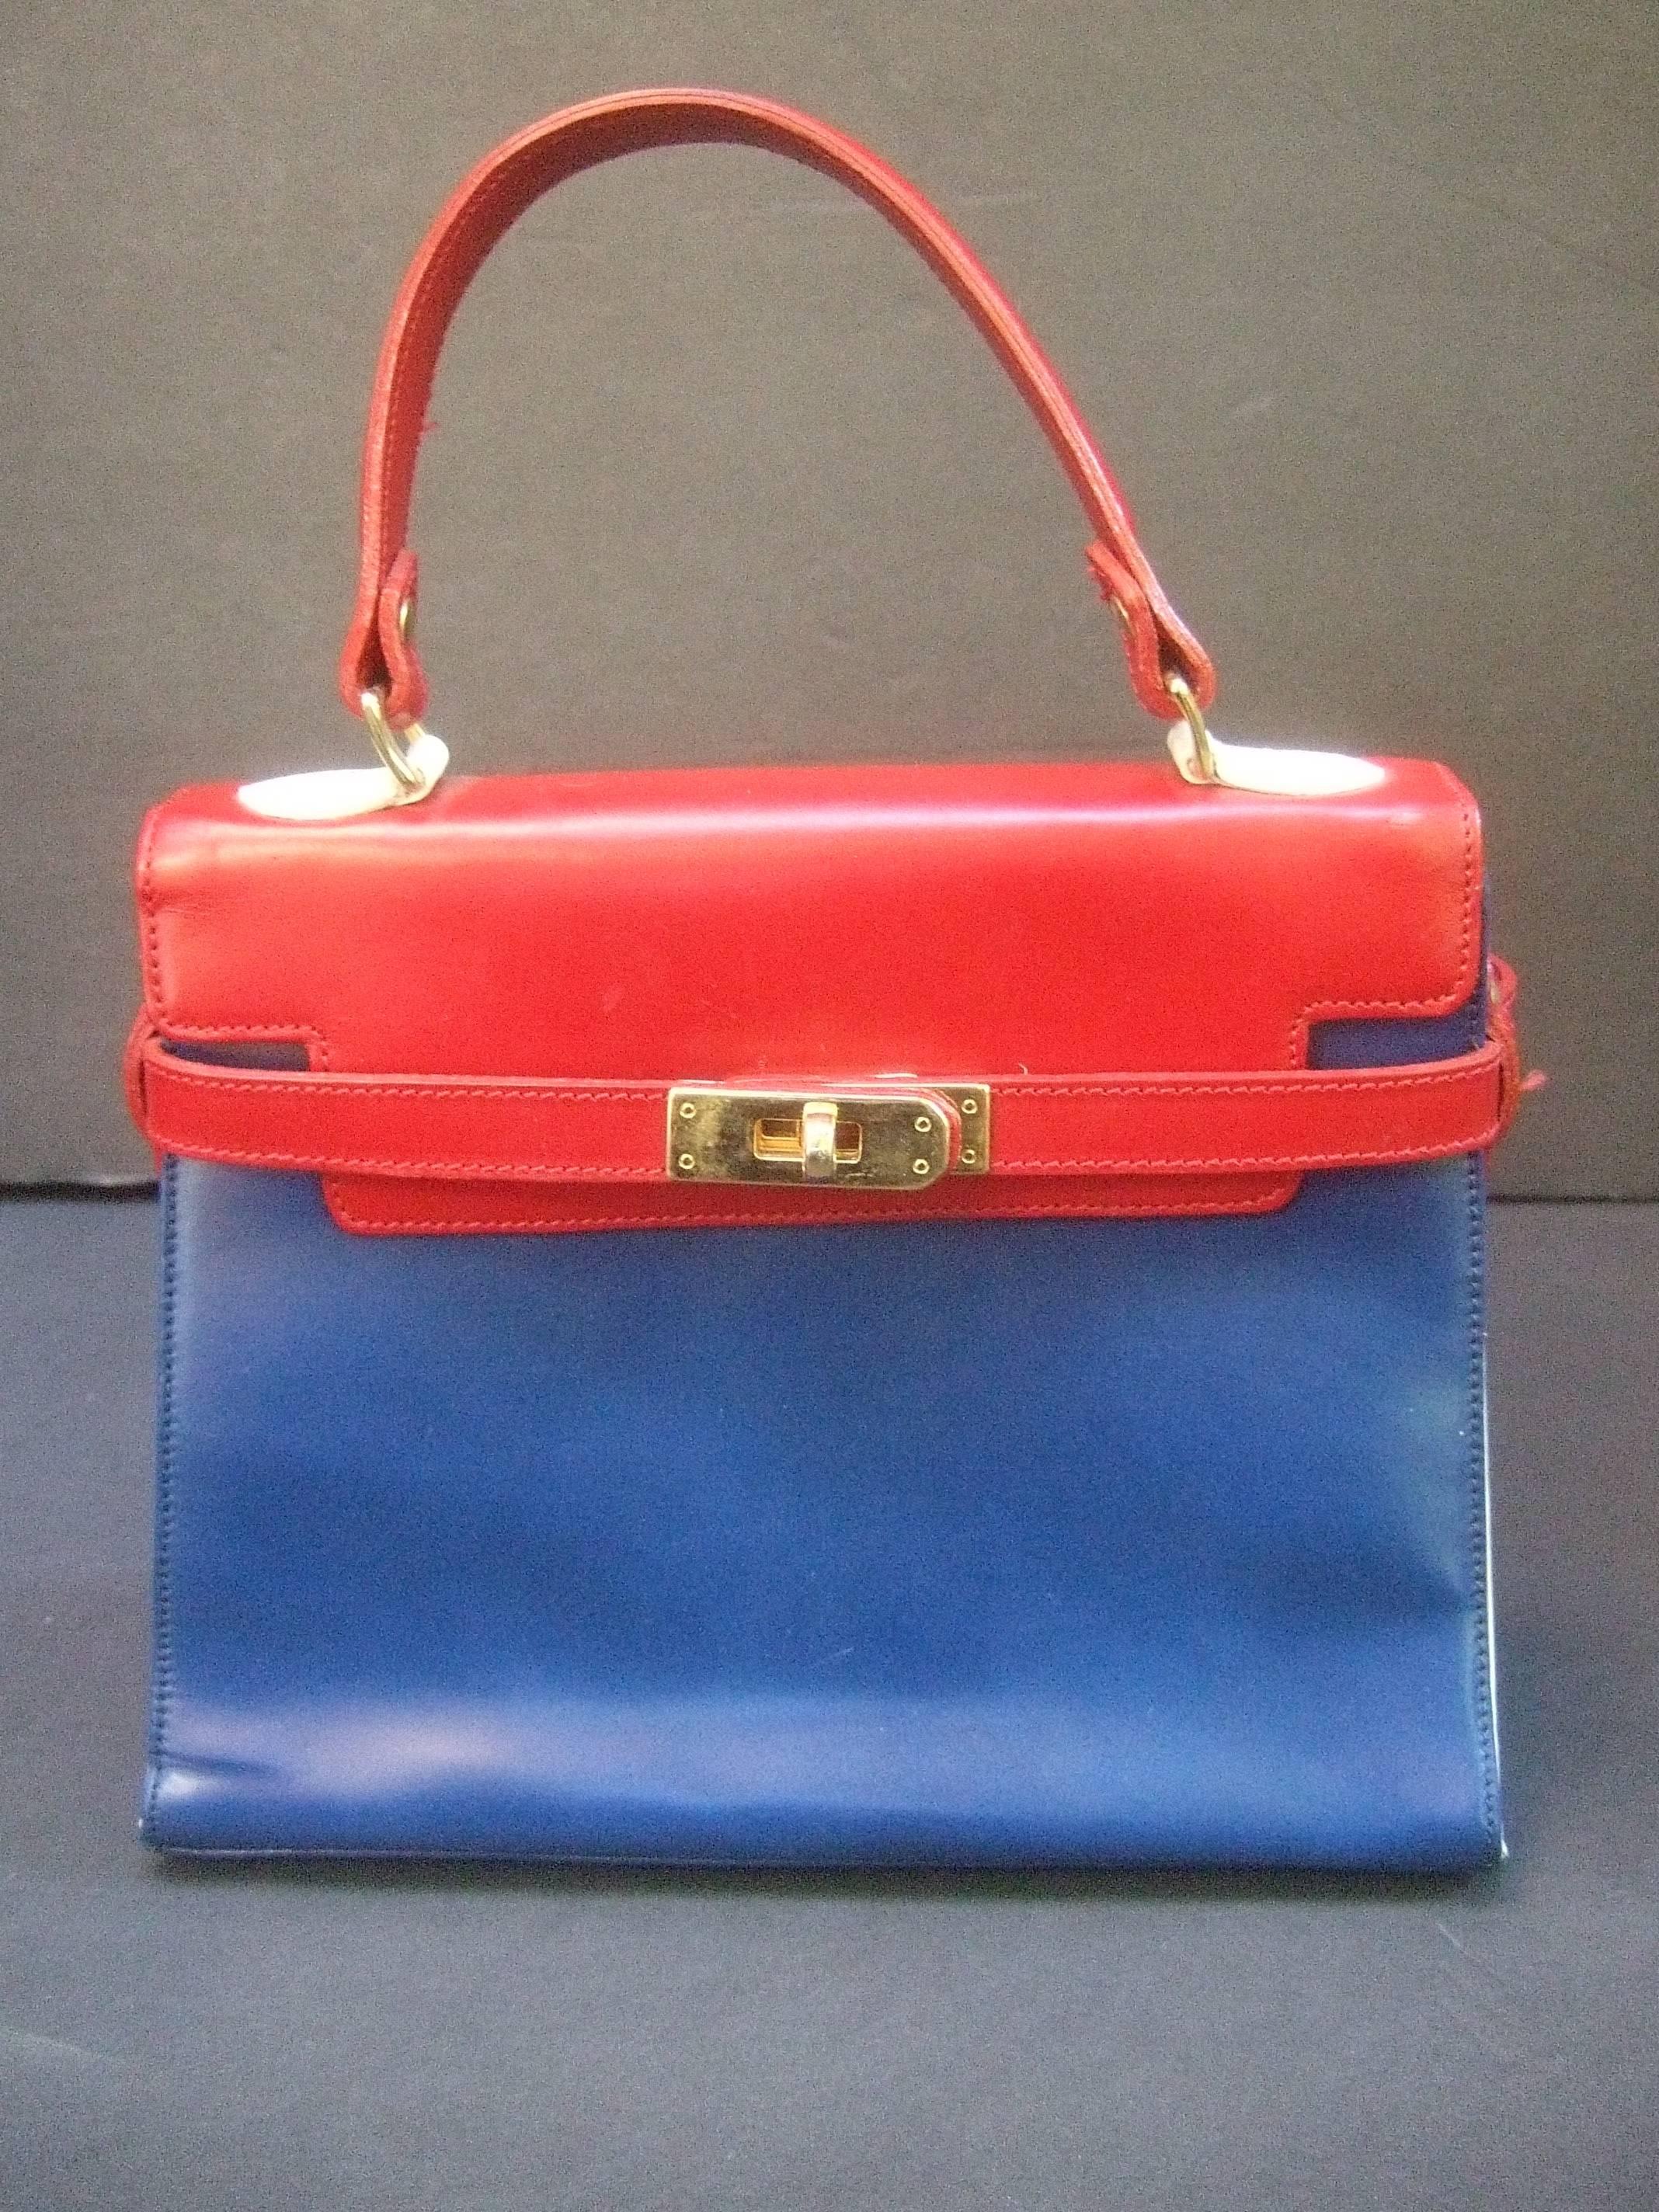 Women's Chic mod Italian leather classic handbag c 1970s